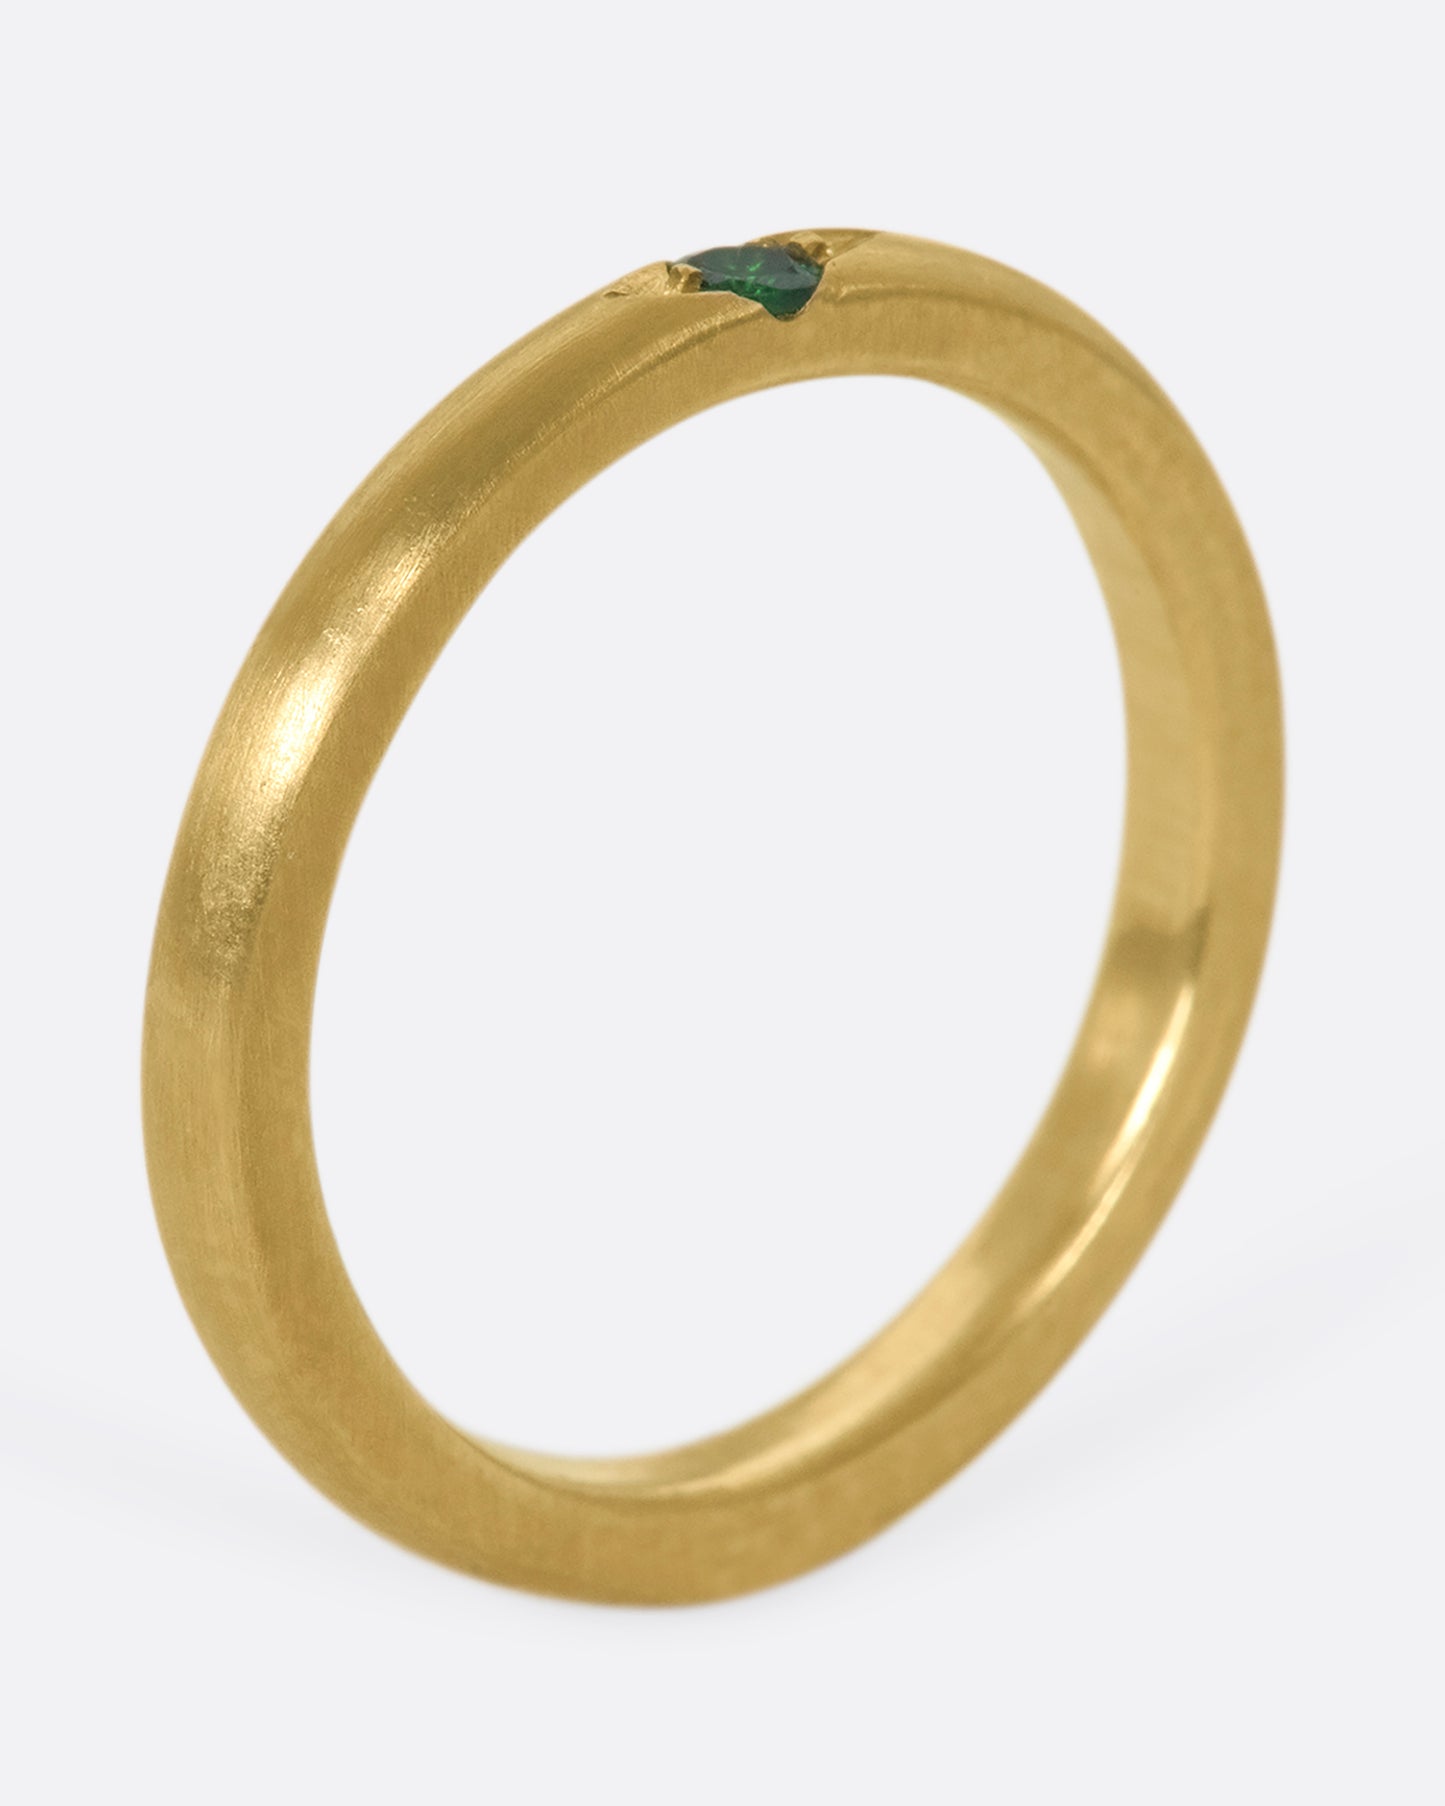 A 10k gold band with a single beautiful flush-set tsavorite garnet